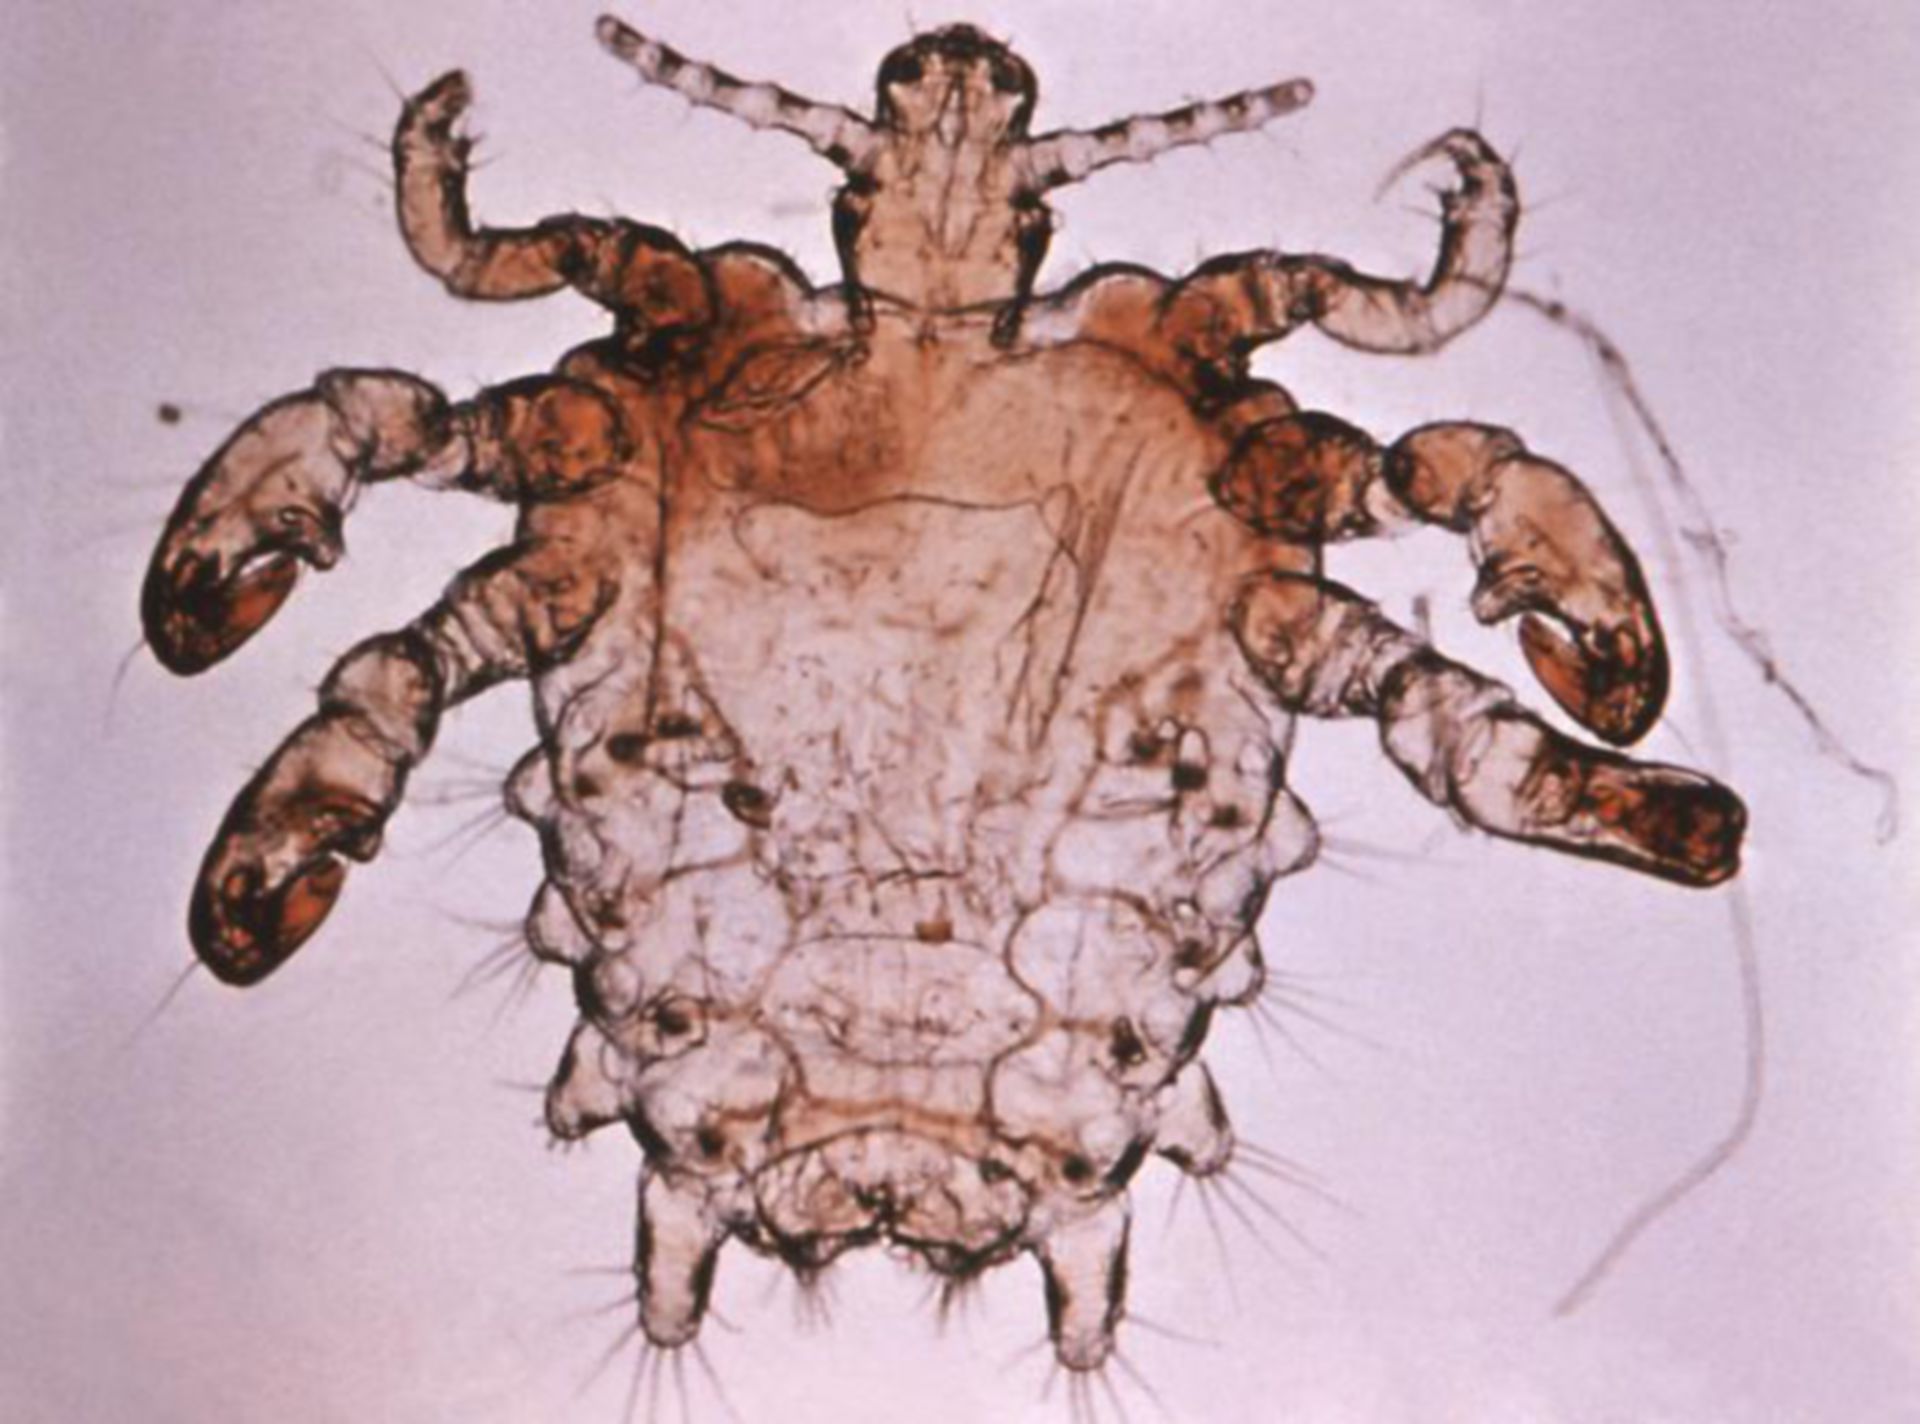 Pthius pubis - crab louse Sackratte